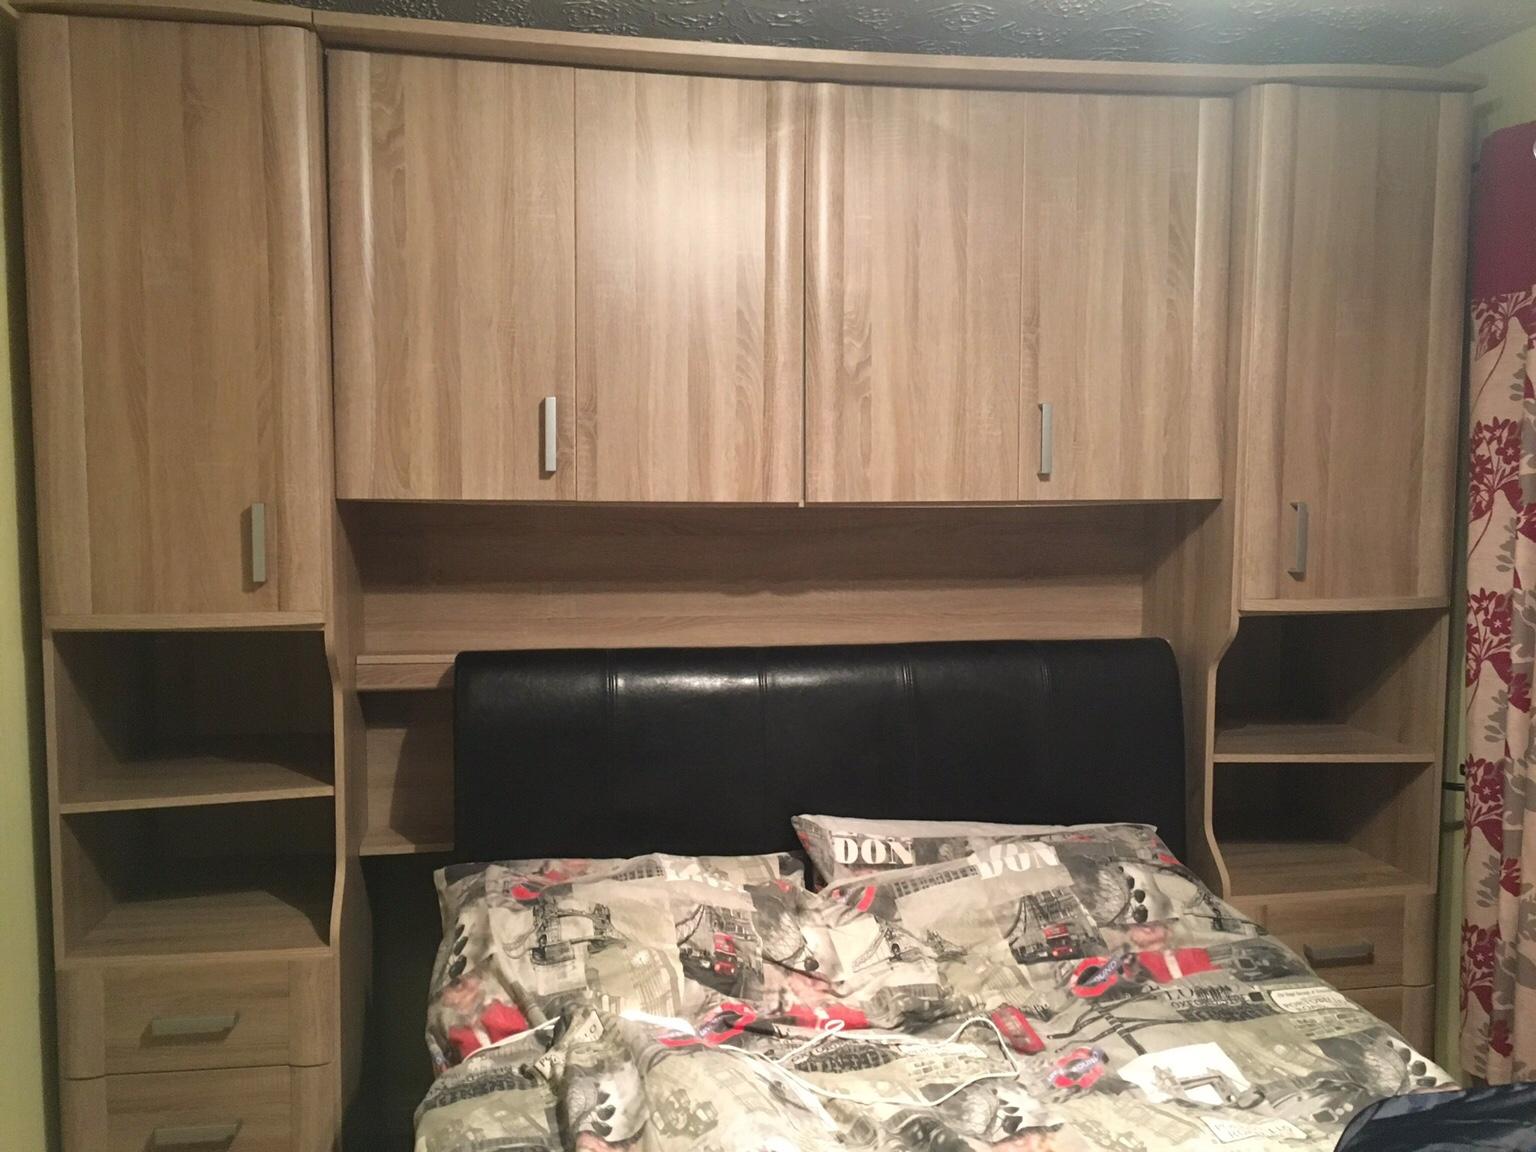 Bedroom Furniture King Size Overbed, Overbed Storage For King Size Bed